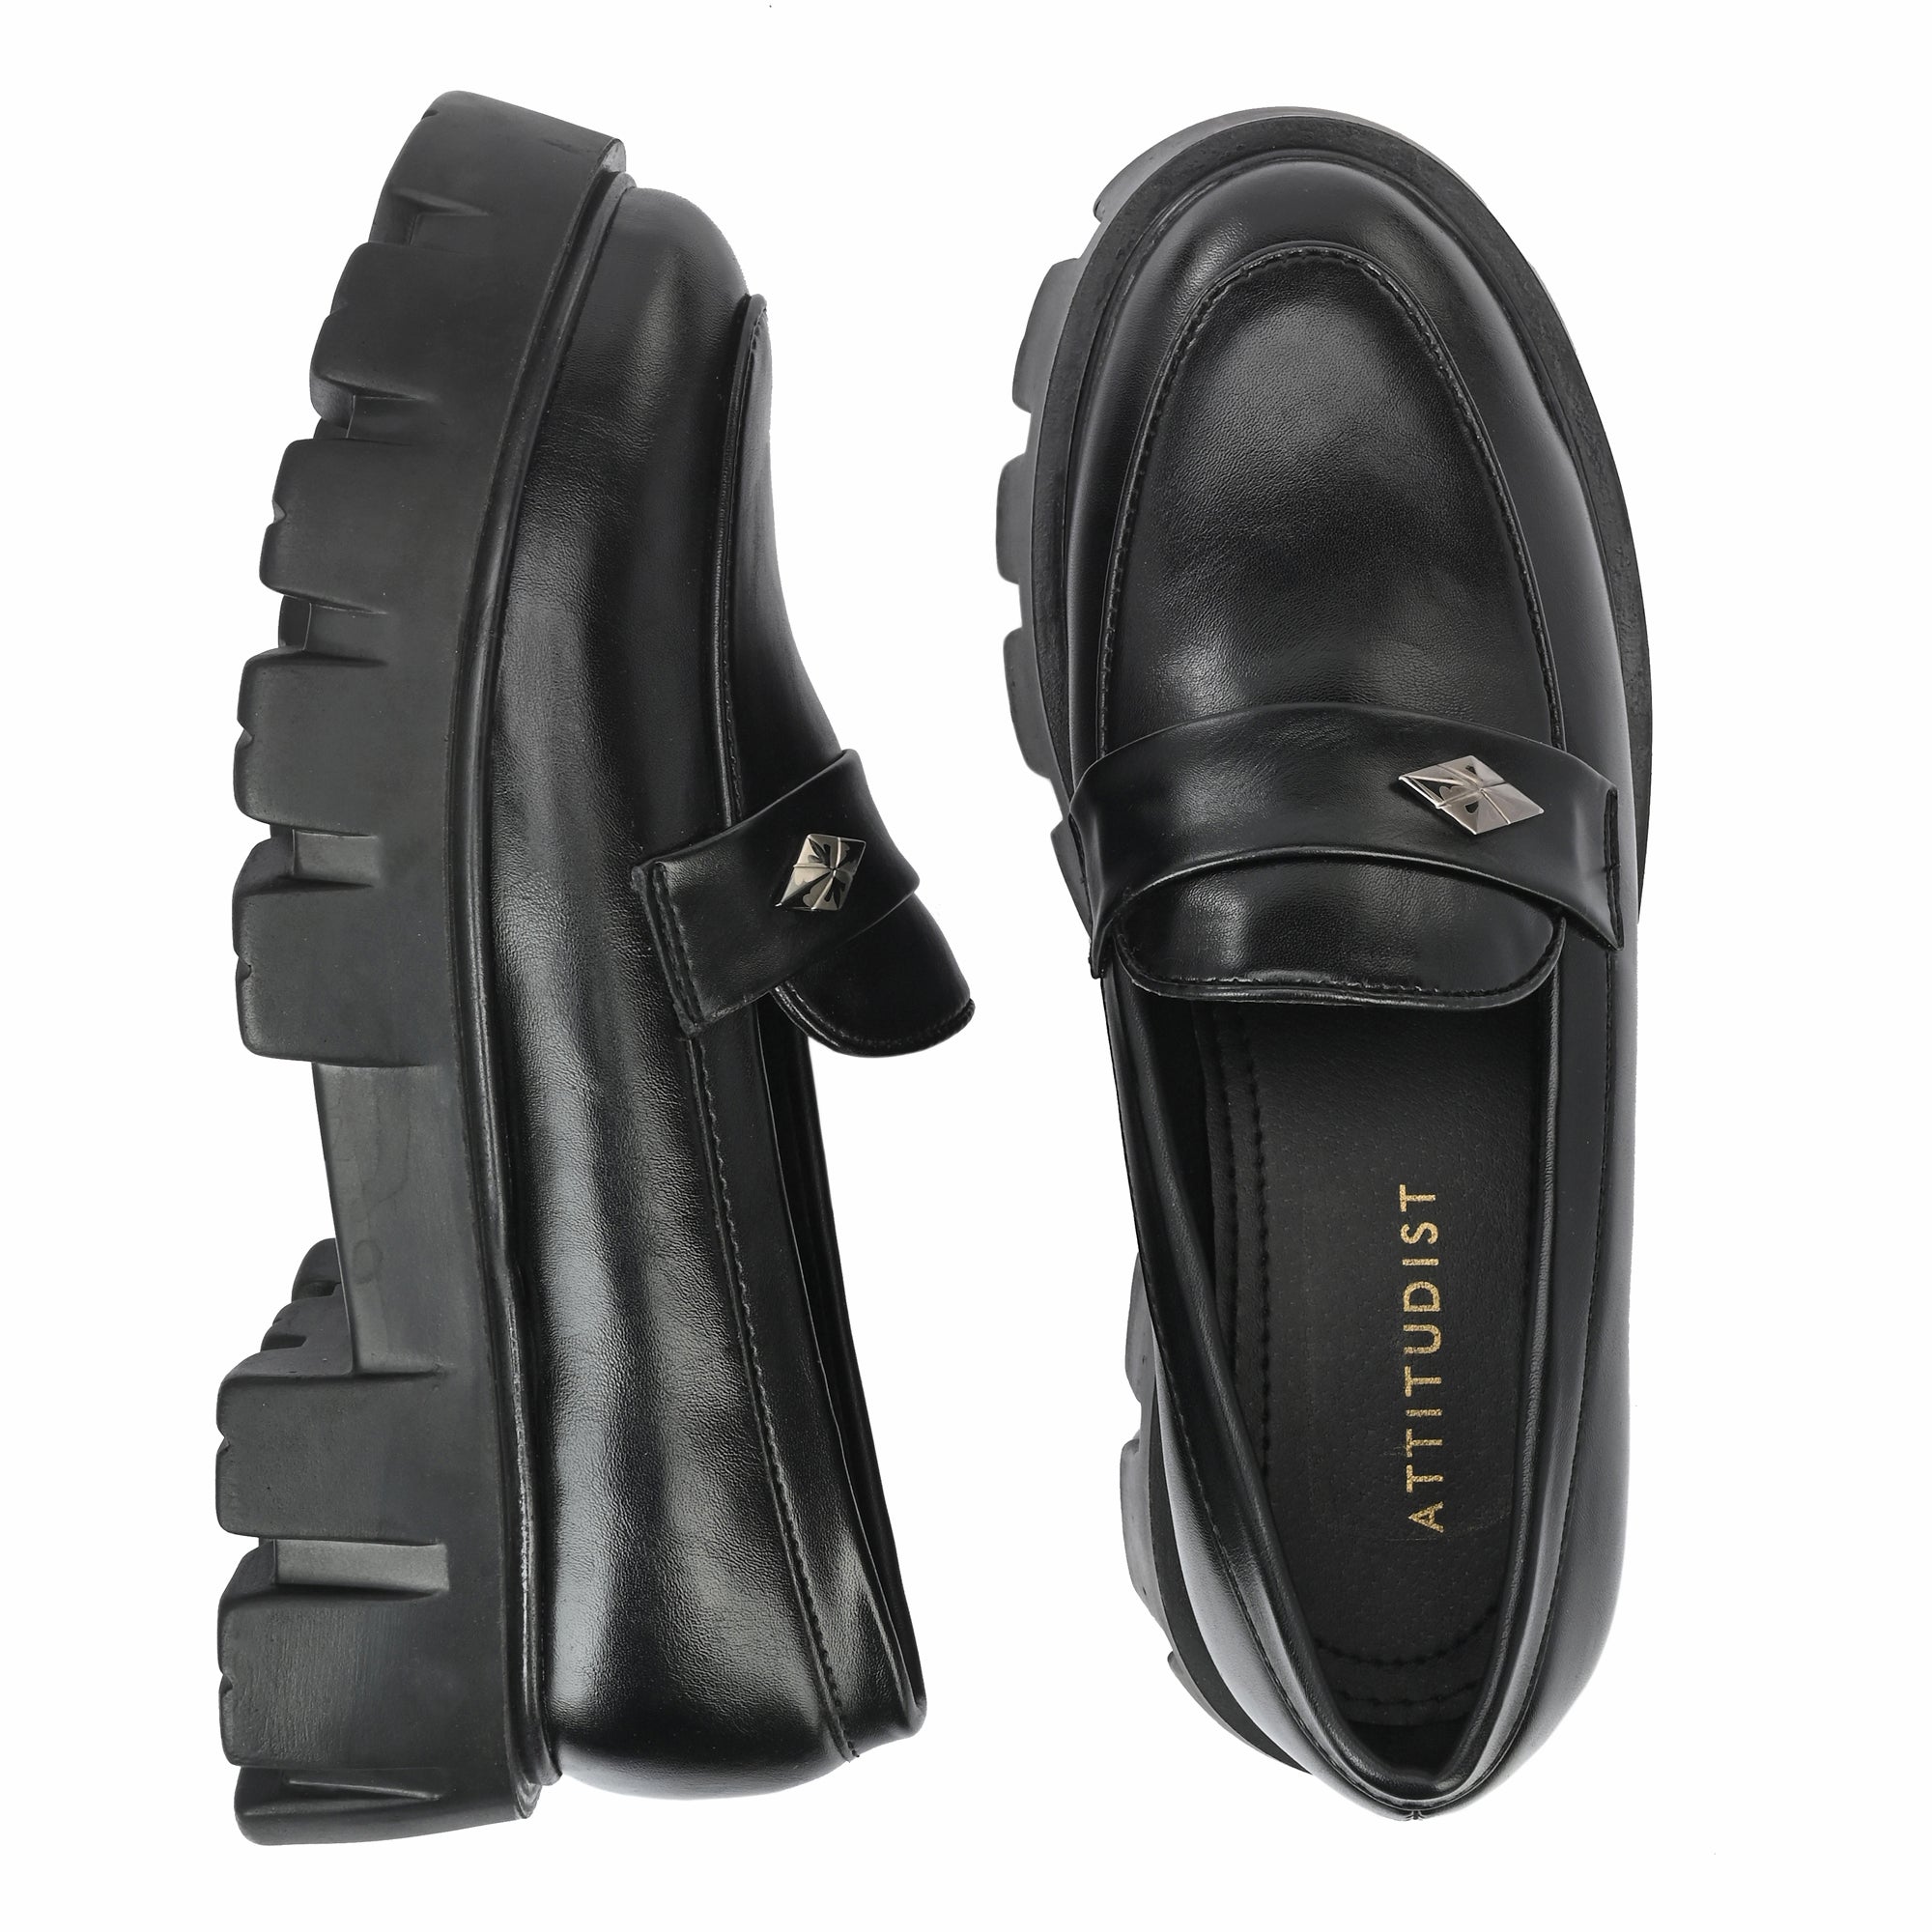 NewStylish Mens Fashion Footwear Double Monk Strap High Heel Shoes | eBay